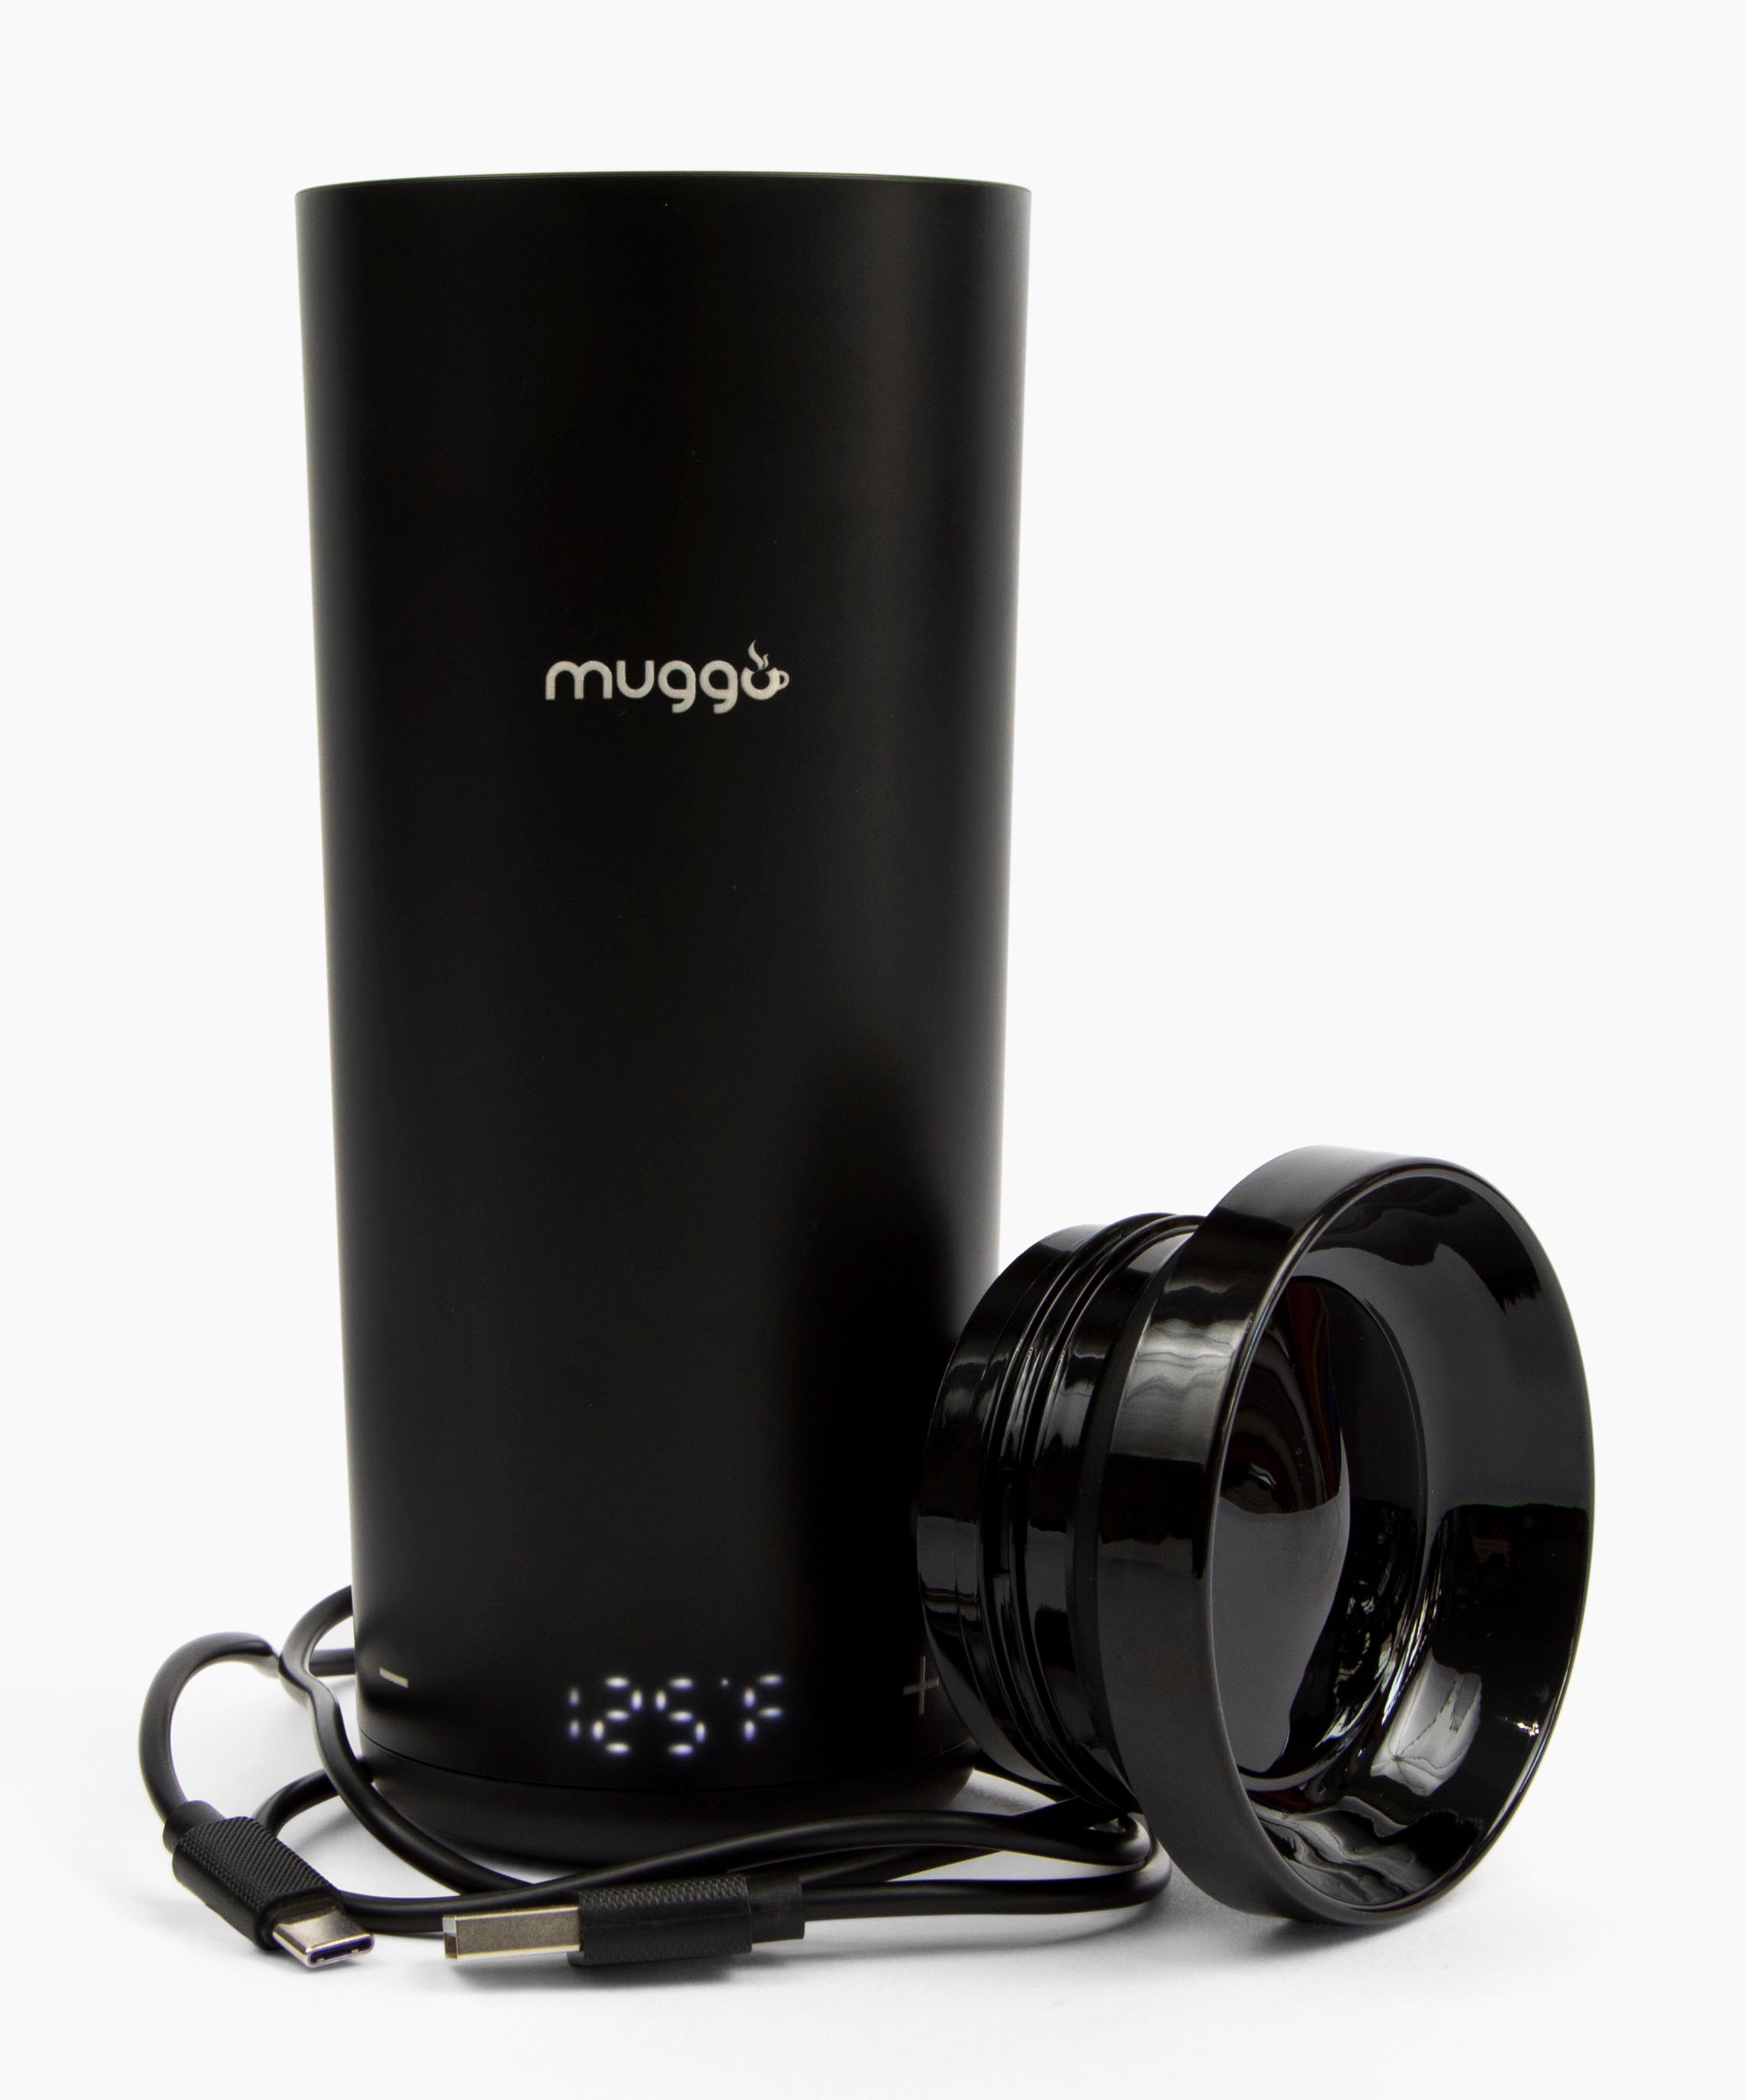 Muggo Mug with type C charging - Muggo